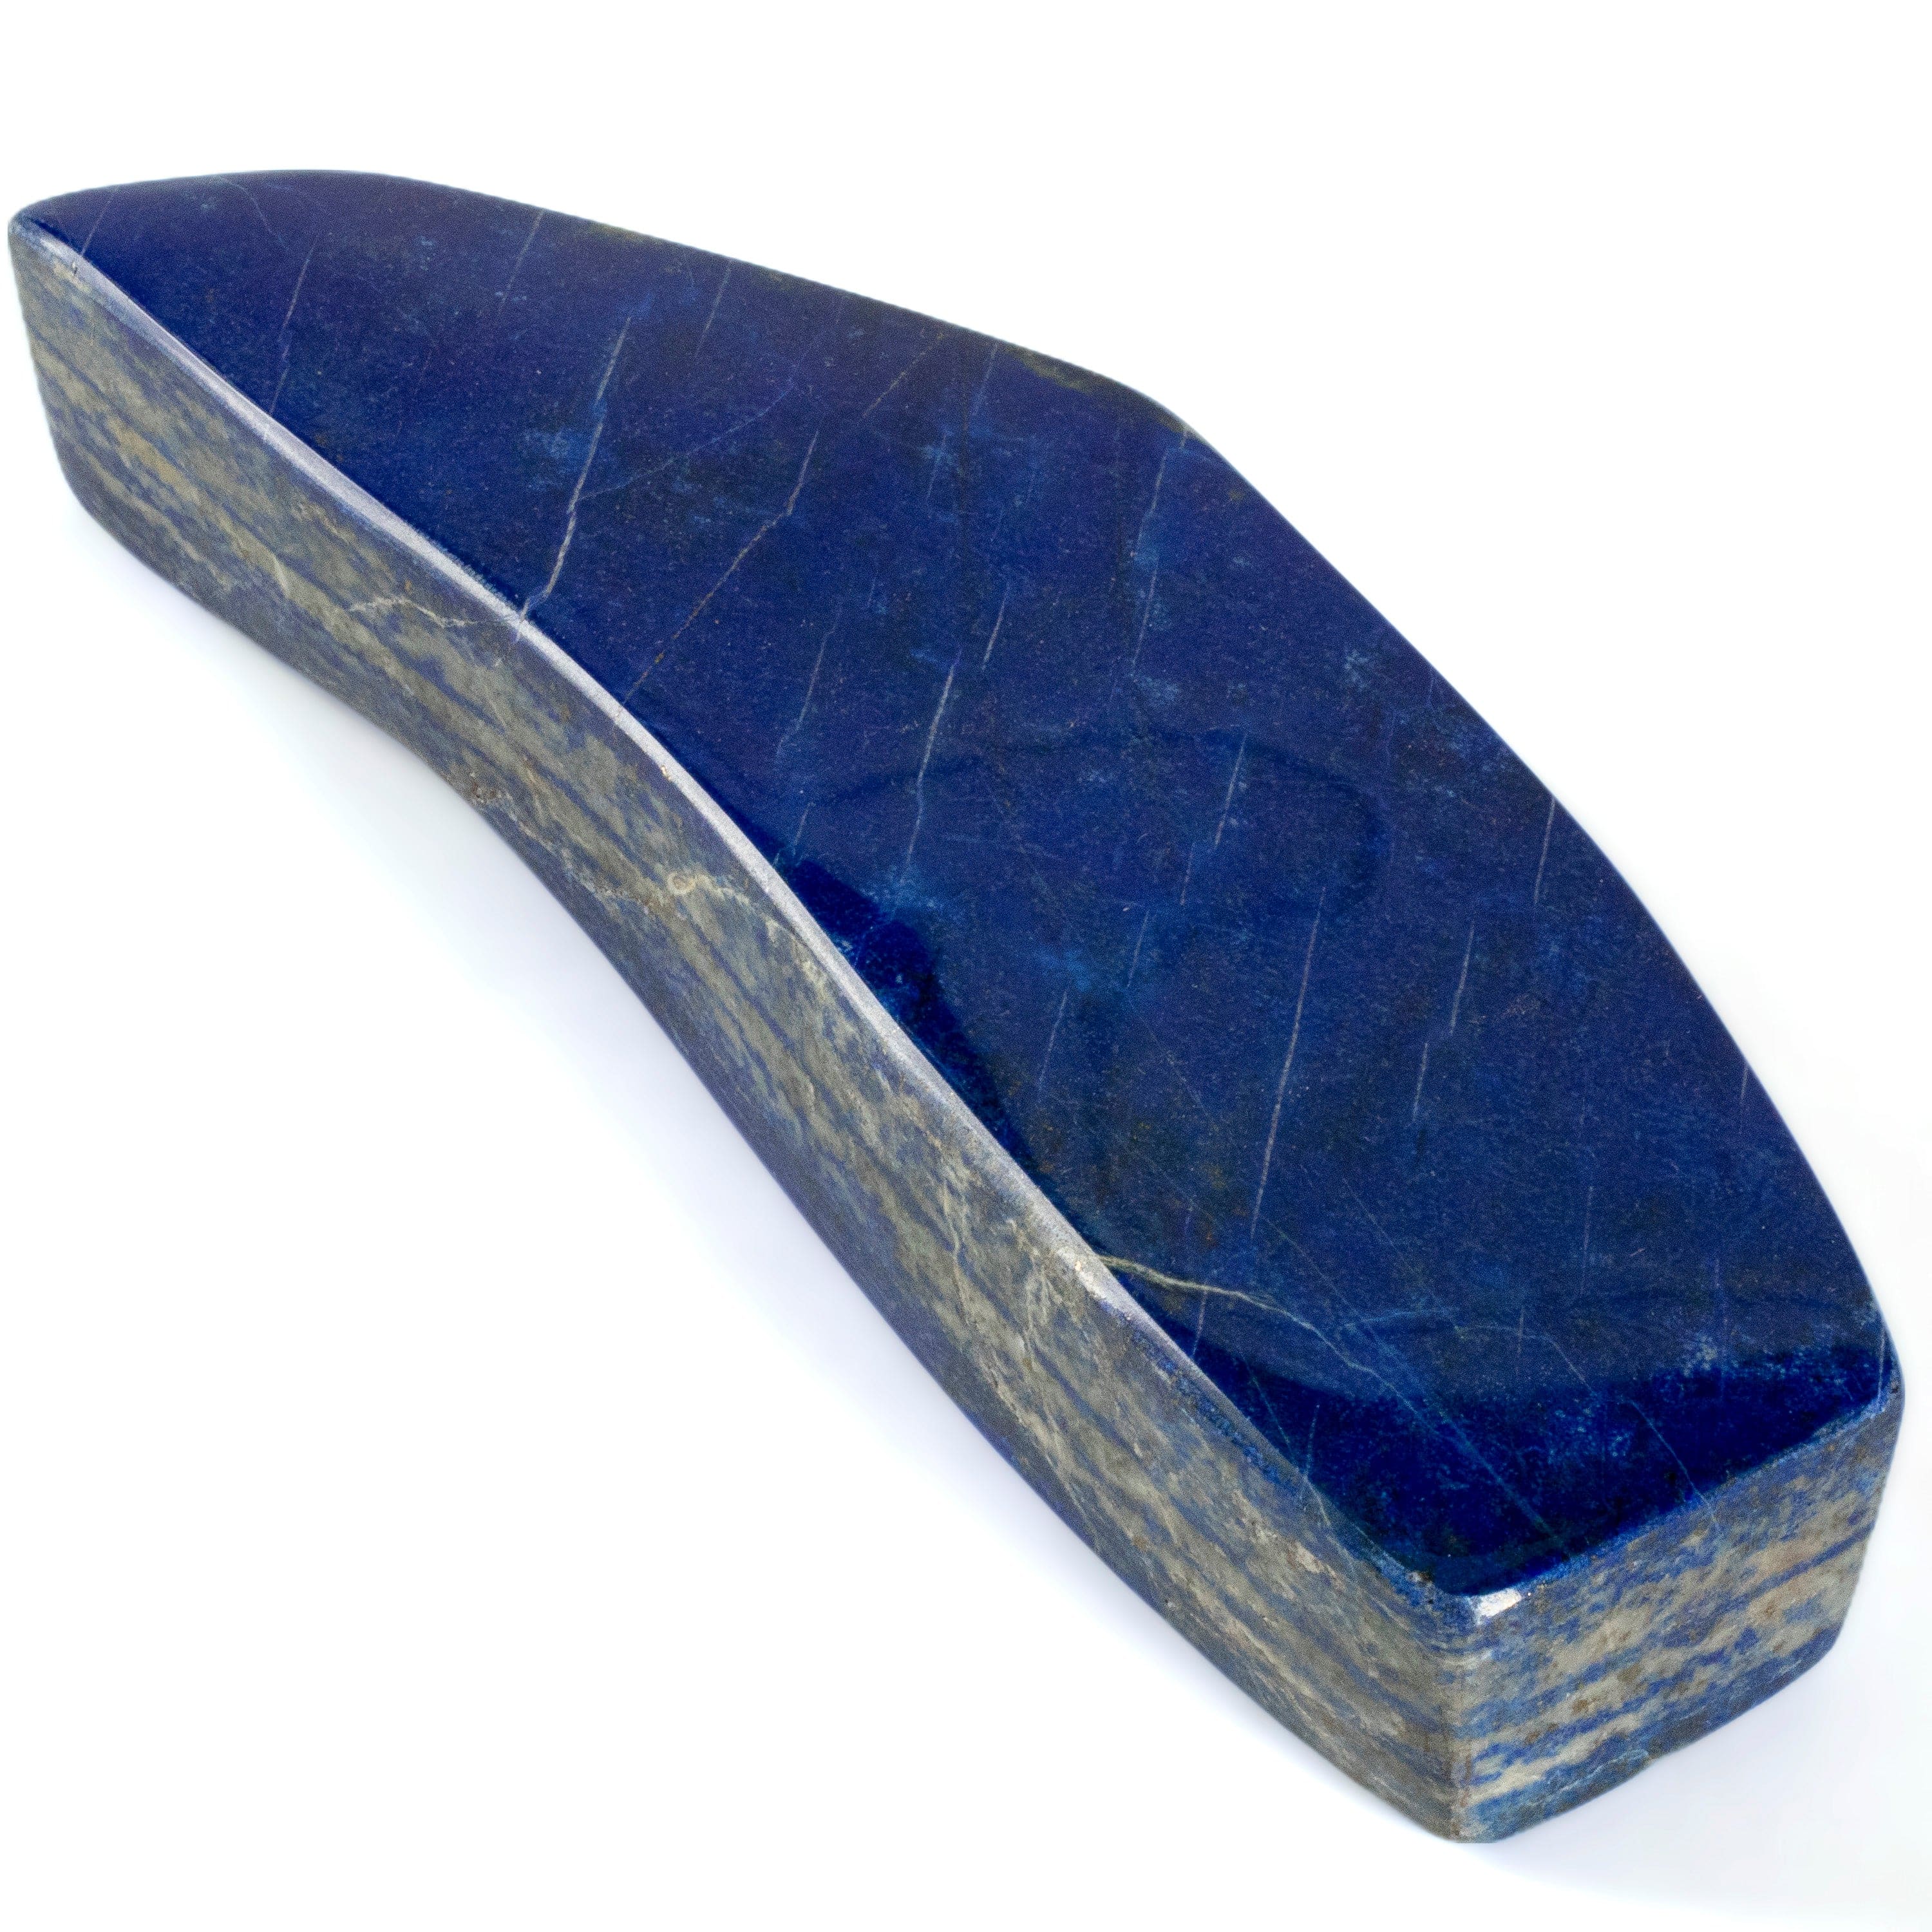 Kalifano Lapis Lapis Lazuli Freeform from Afghanistan - 7" / 853 grams LP850.003